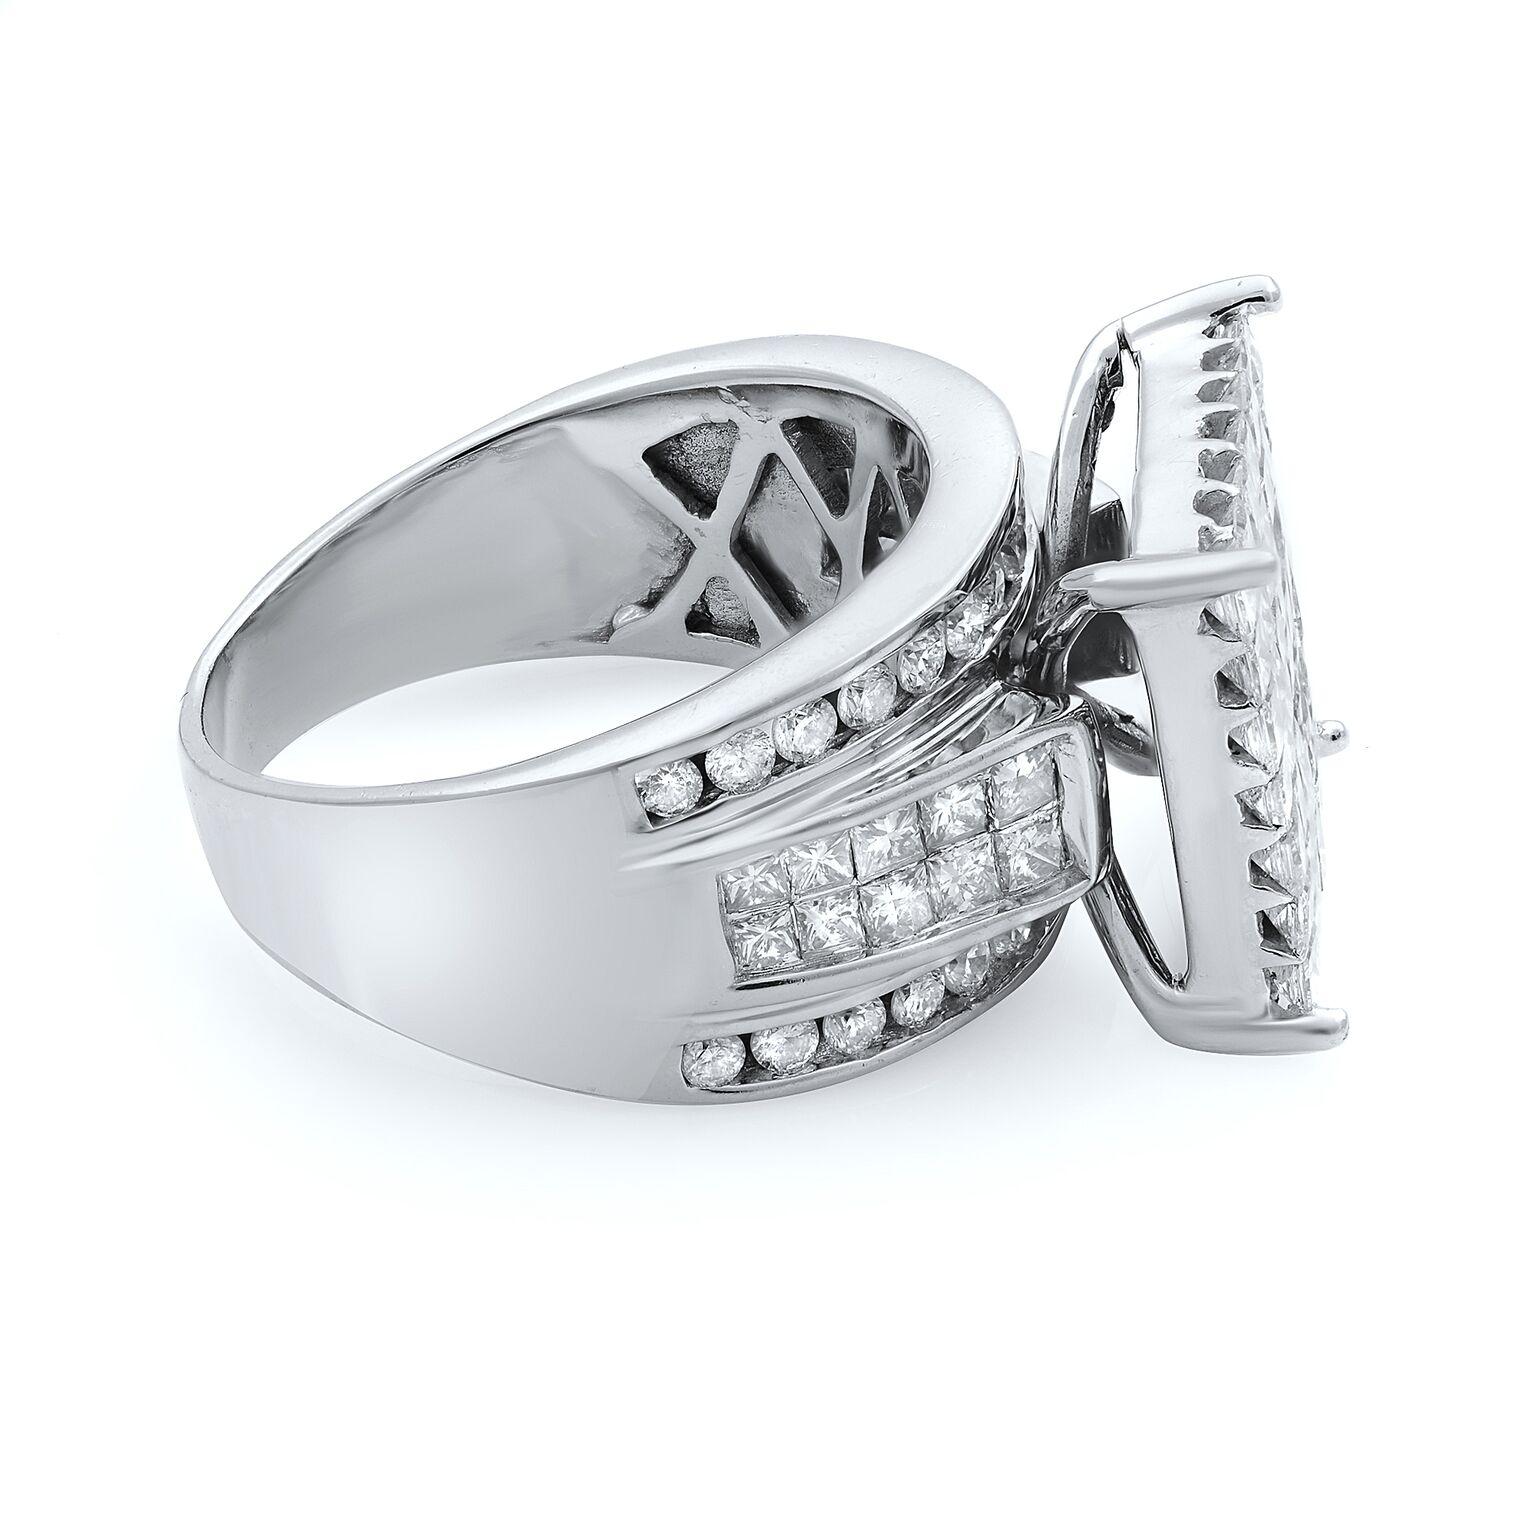 Empire Rachel Koen Wide Diamond Engagement Band Ring 14K White Gold 3.00 Cttw For Sale